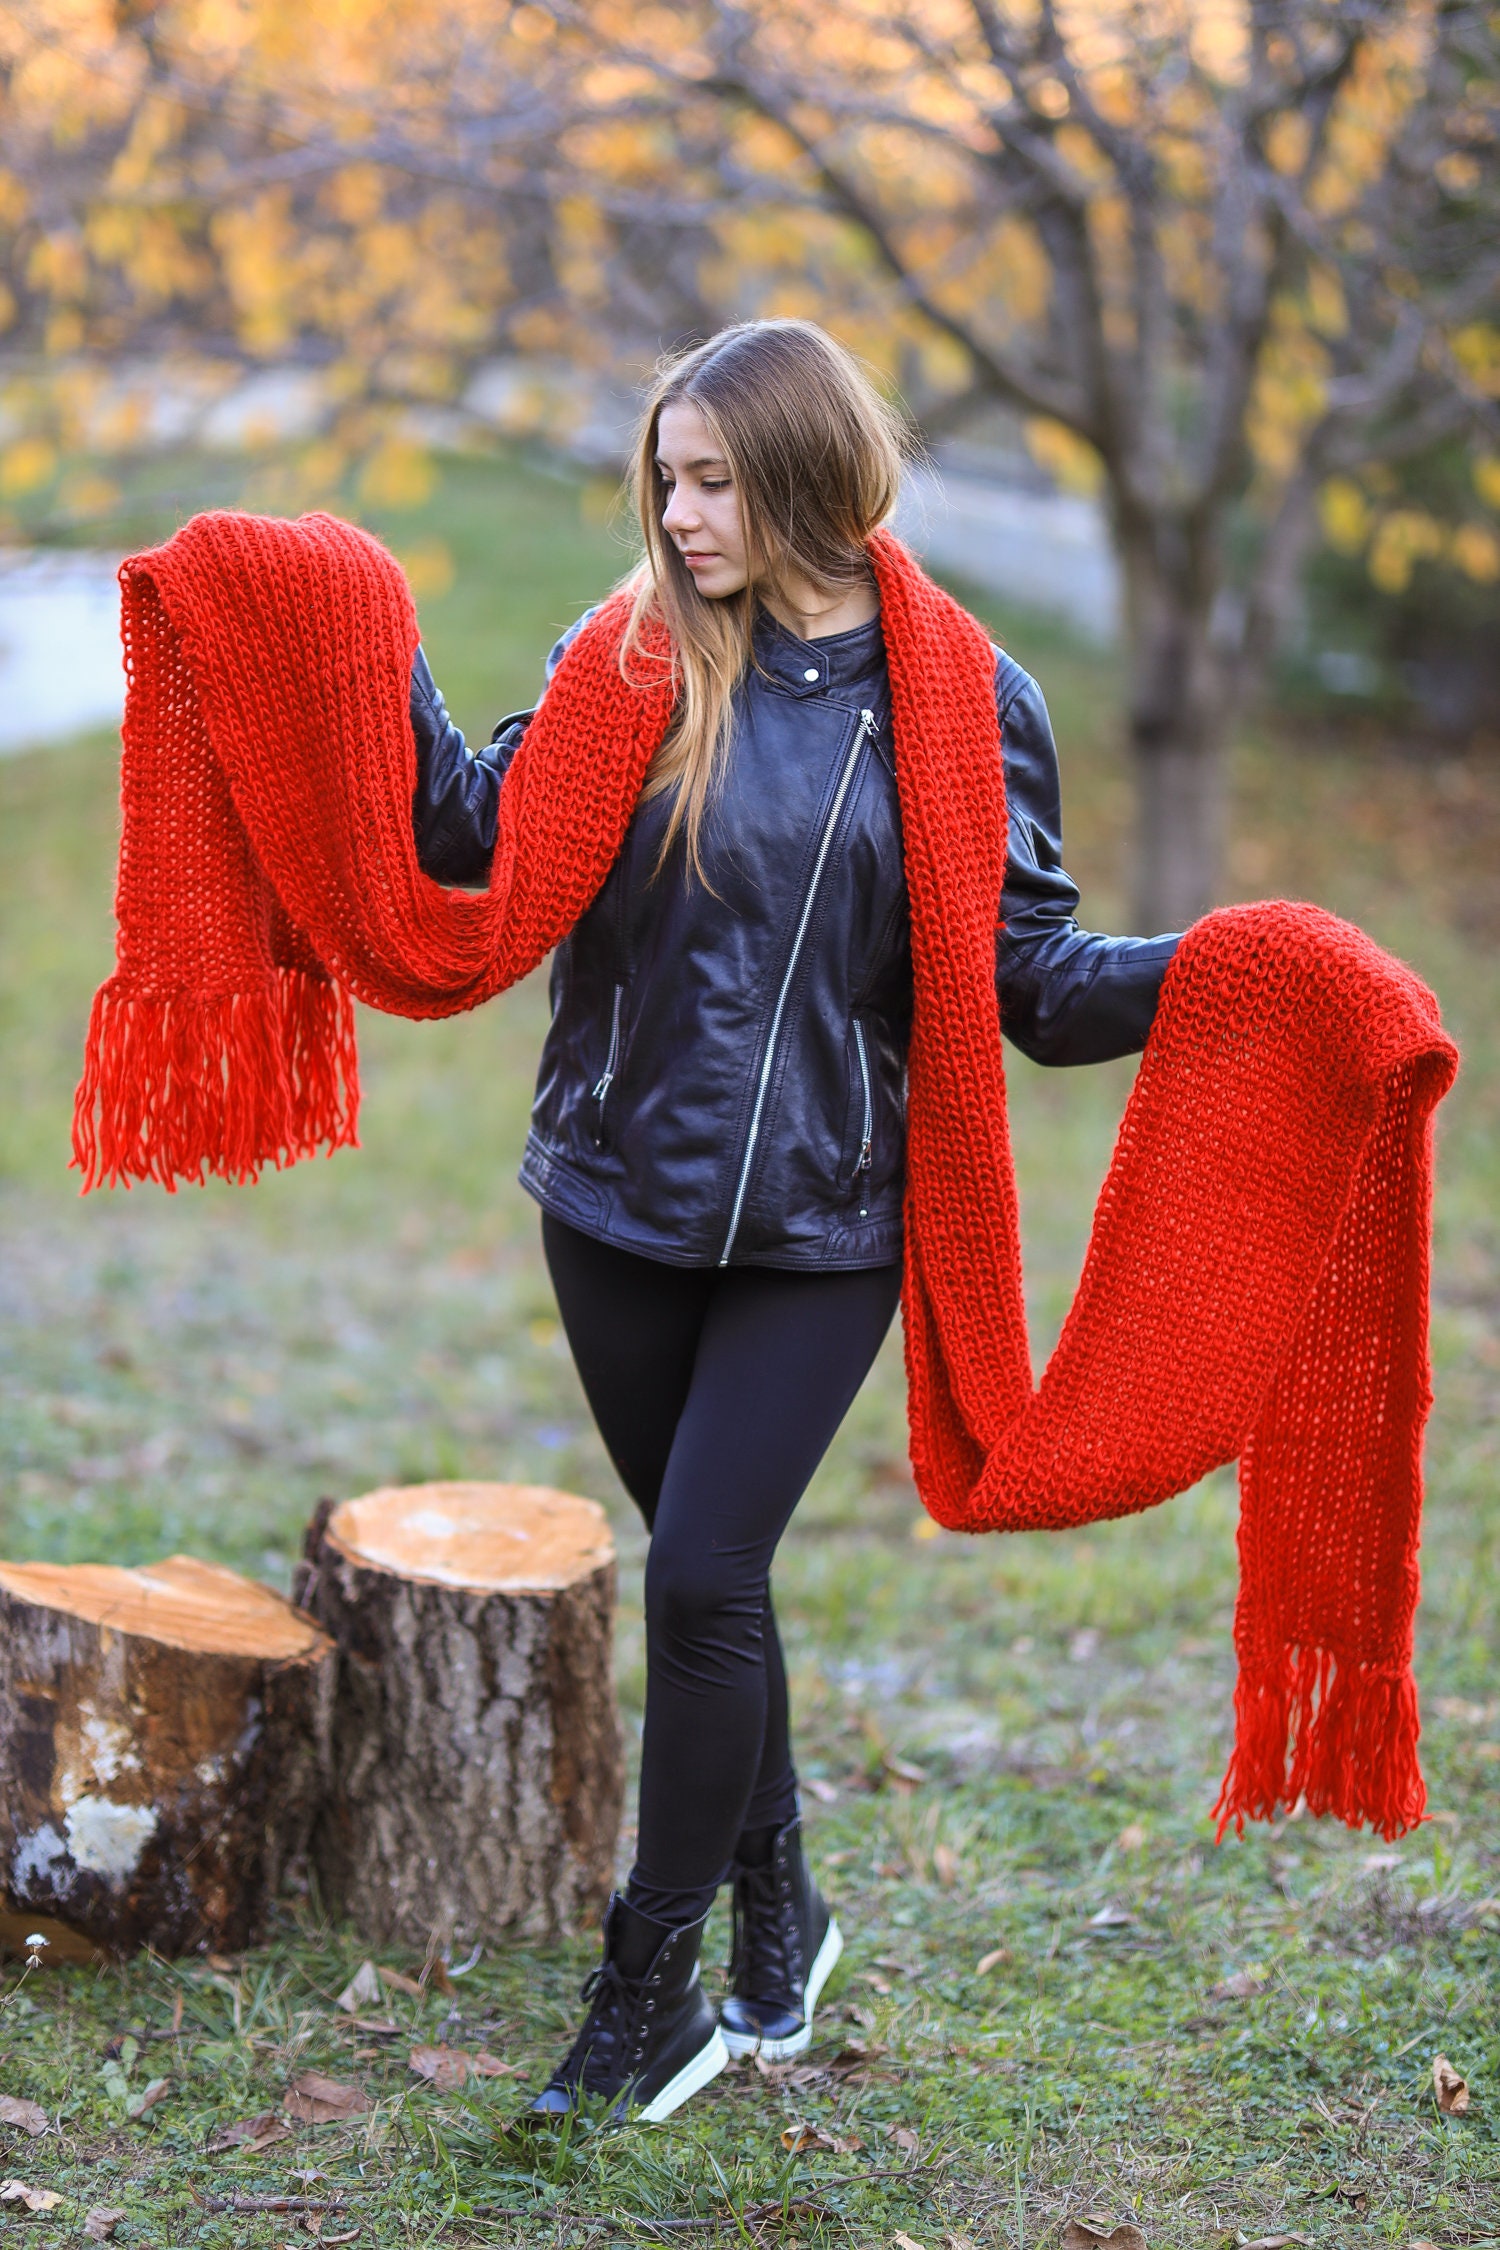 Wool Art Oversized Scarf 6”x100” (15x250 cm) / Red